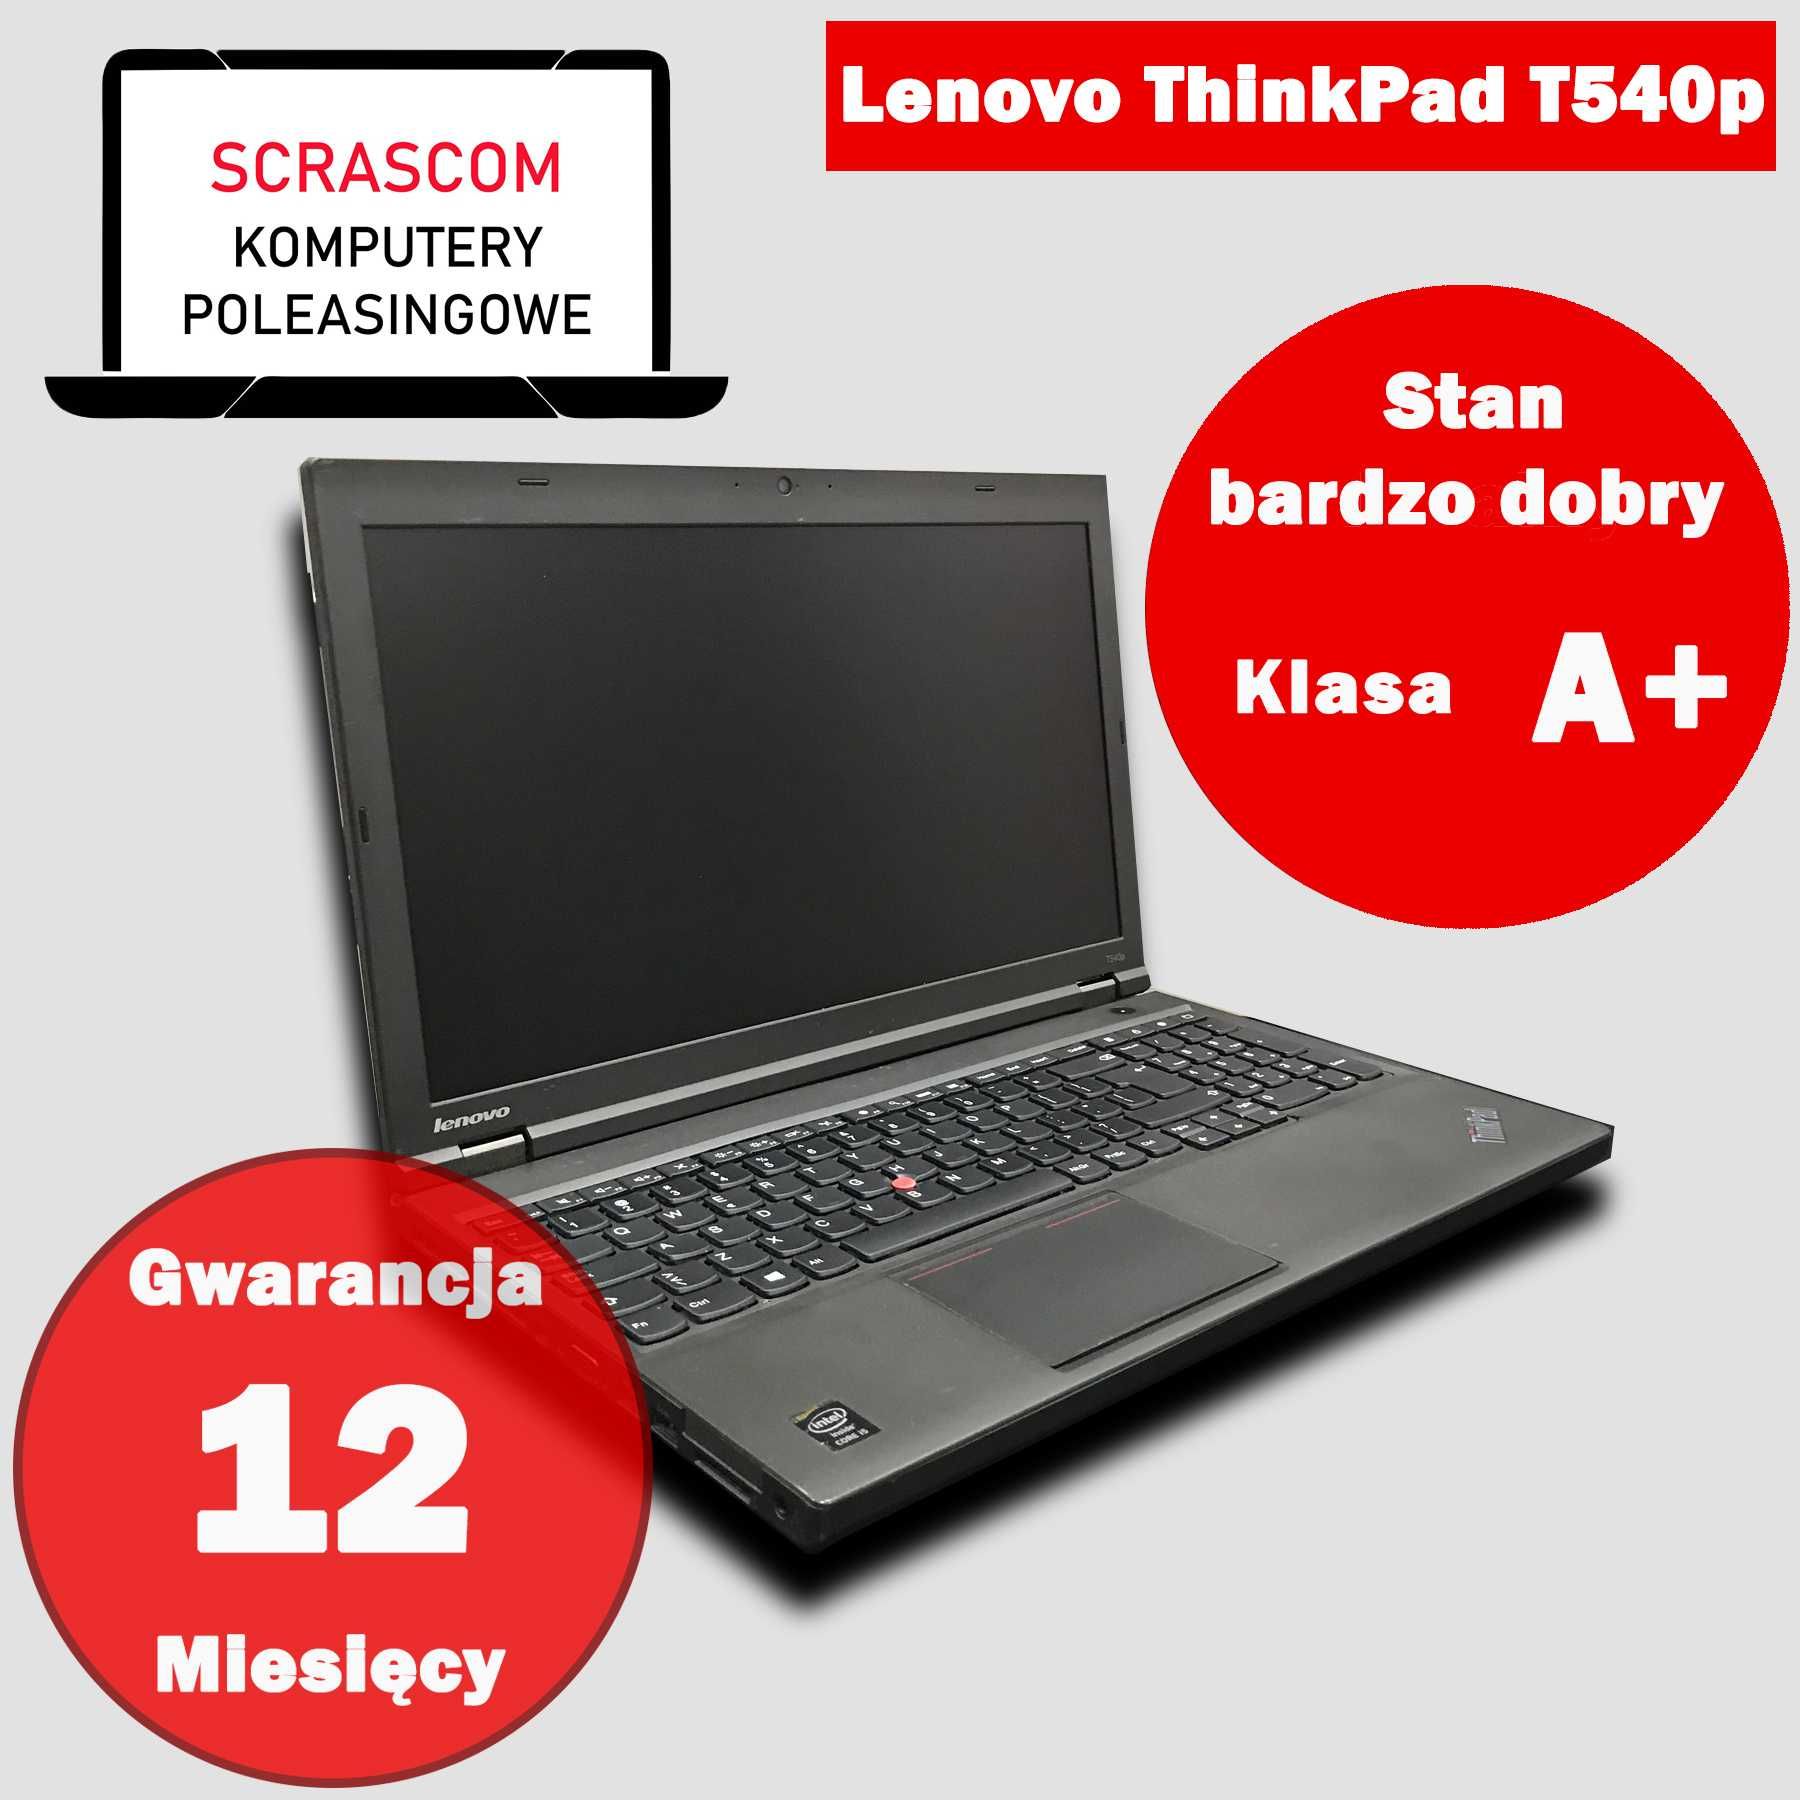 Laptop Lenovo ThinkPad T540p i5 8GB 240GB SSD Windows 10 GWAR 12msc